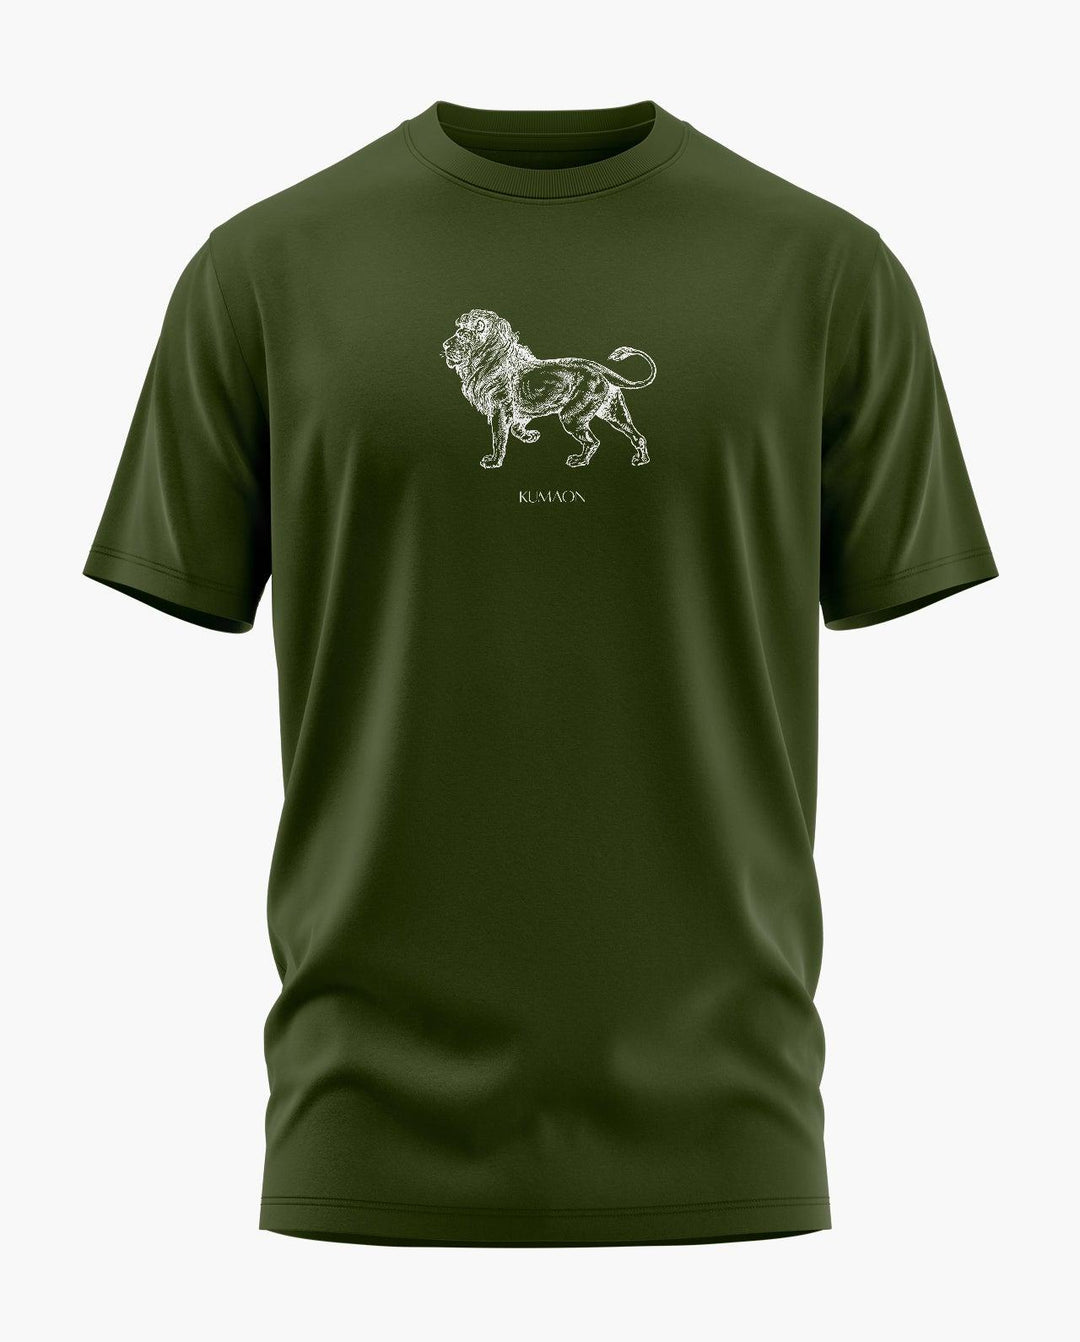 Restless Roar T-Shirt - Aero Armour